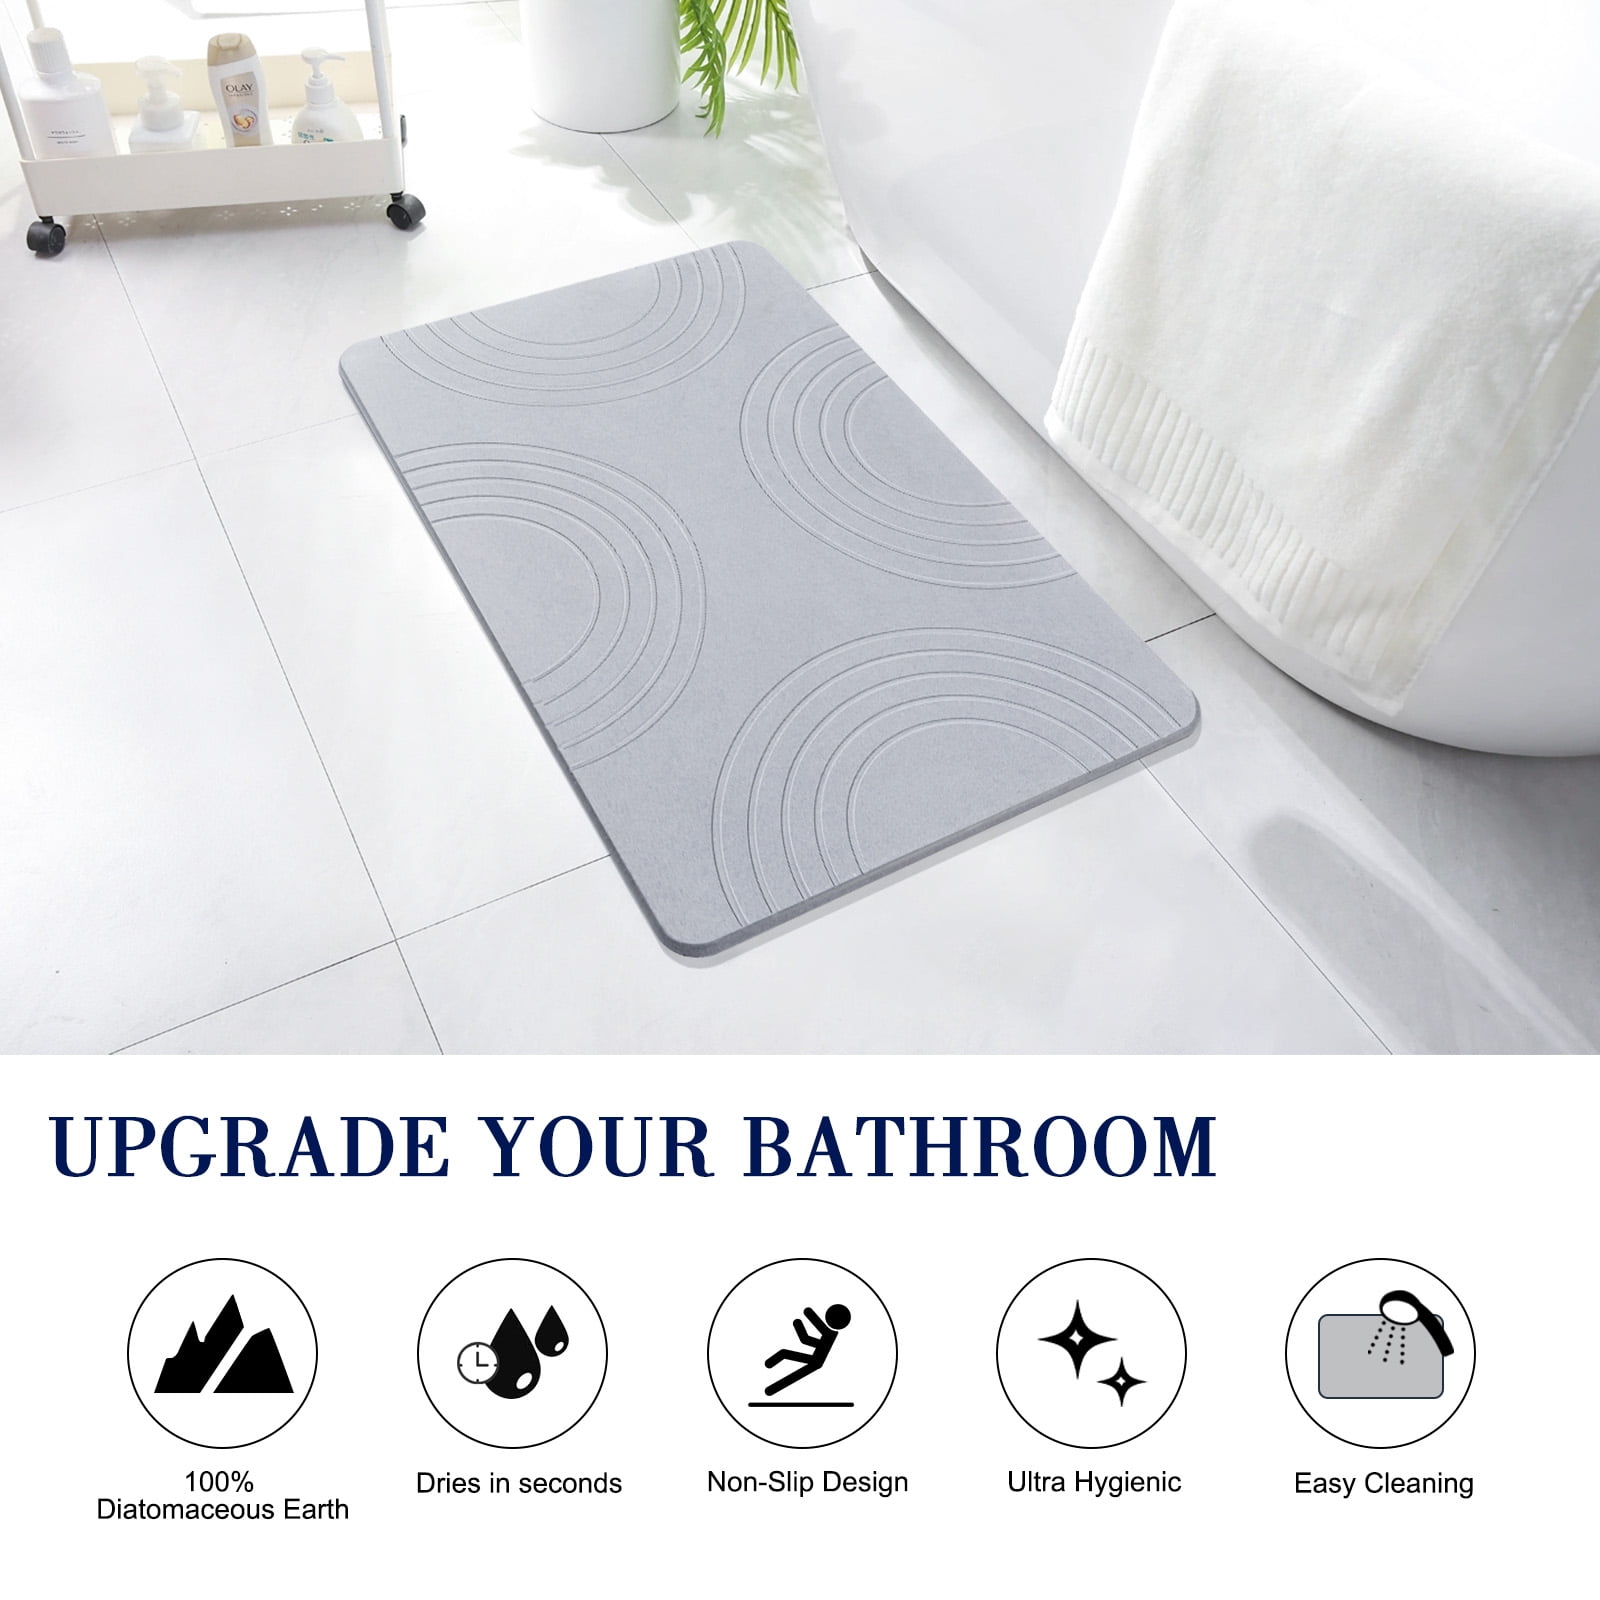 Enhance Your Bathroom : Washhpapa Stone Bath Mat – WASHHPAPA